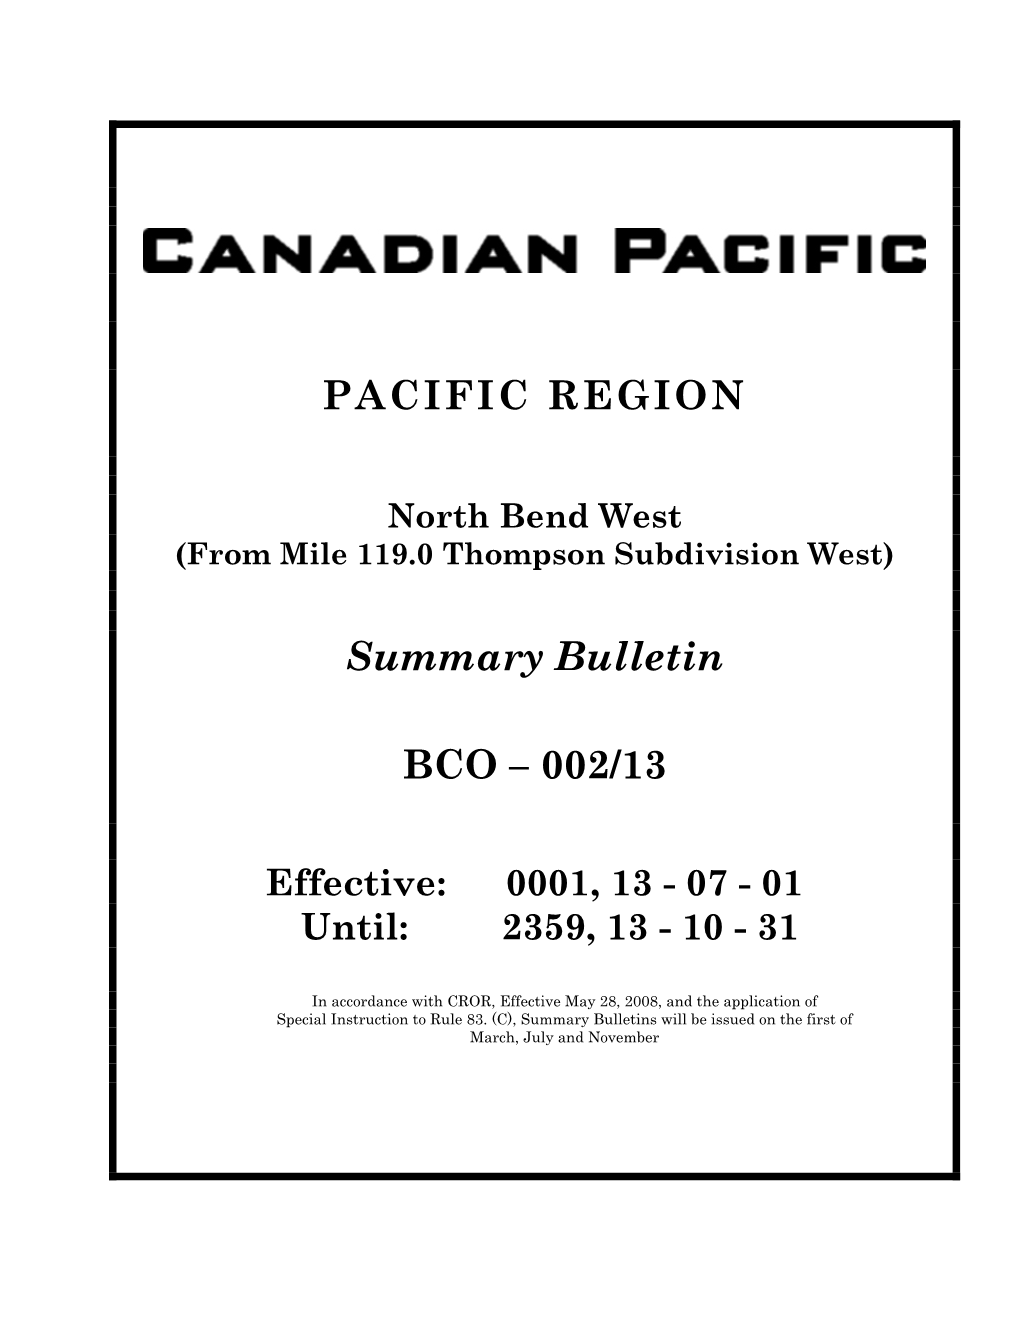 PACIFIC REGION Summary Bulletin